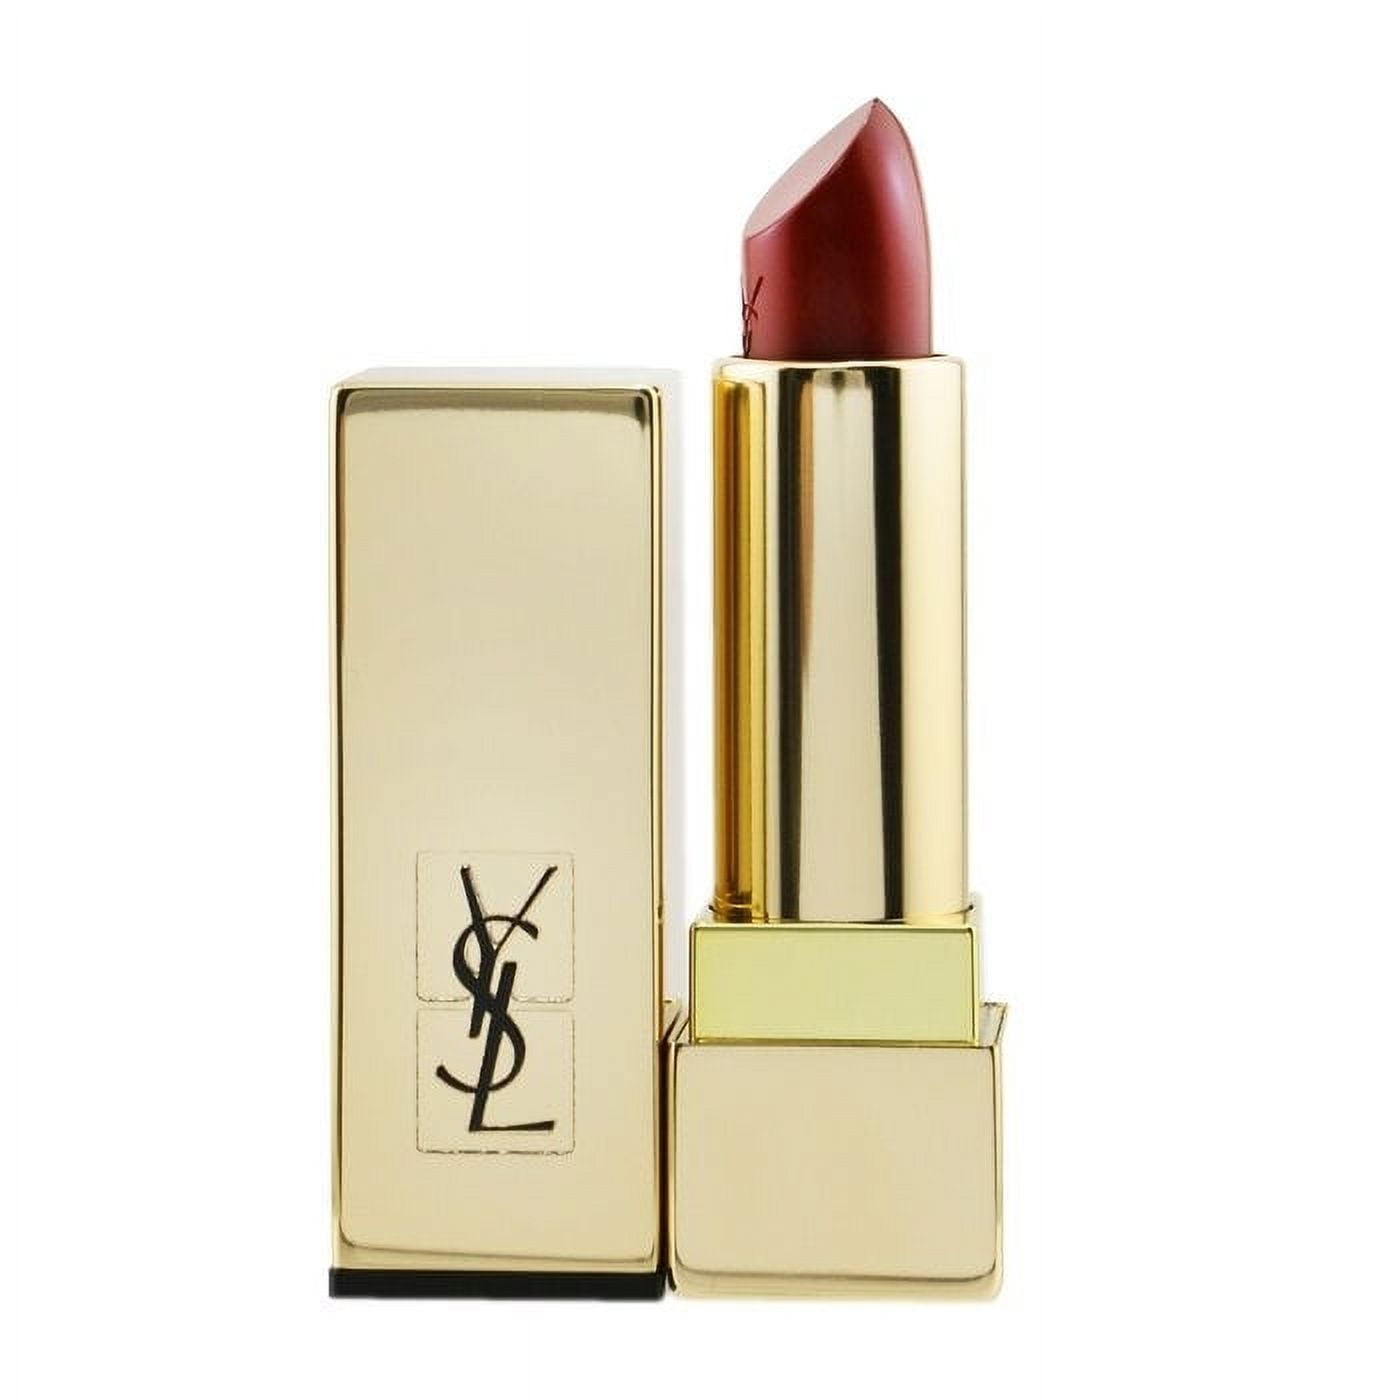 Yves Saint Laurent, Makeup, Yves Saint Laurent Ysl Couture Red Lipstick